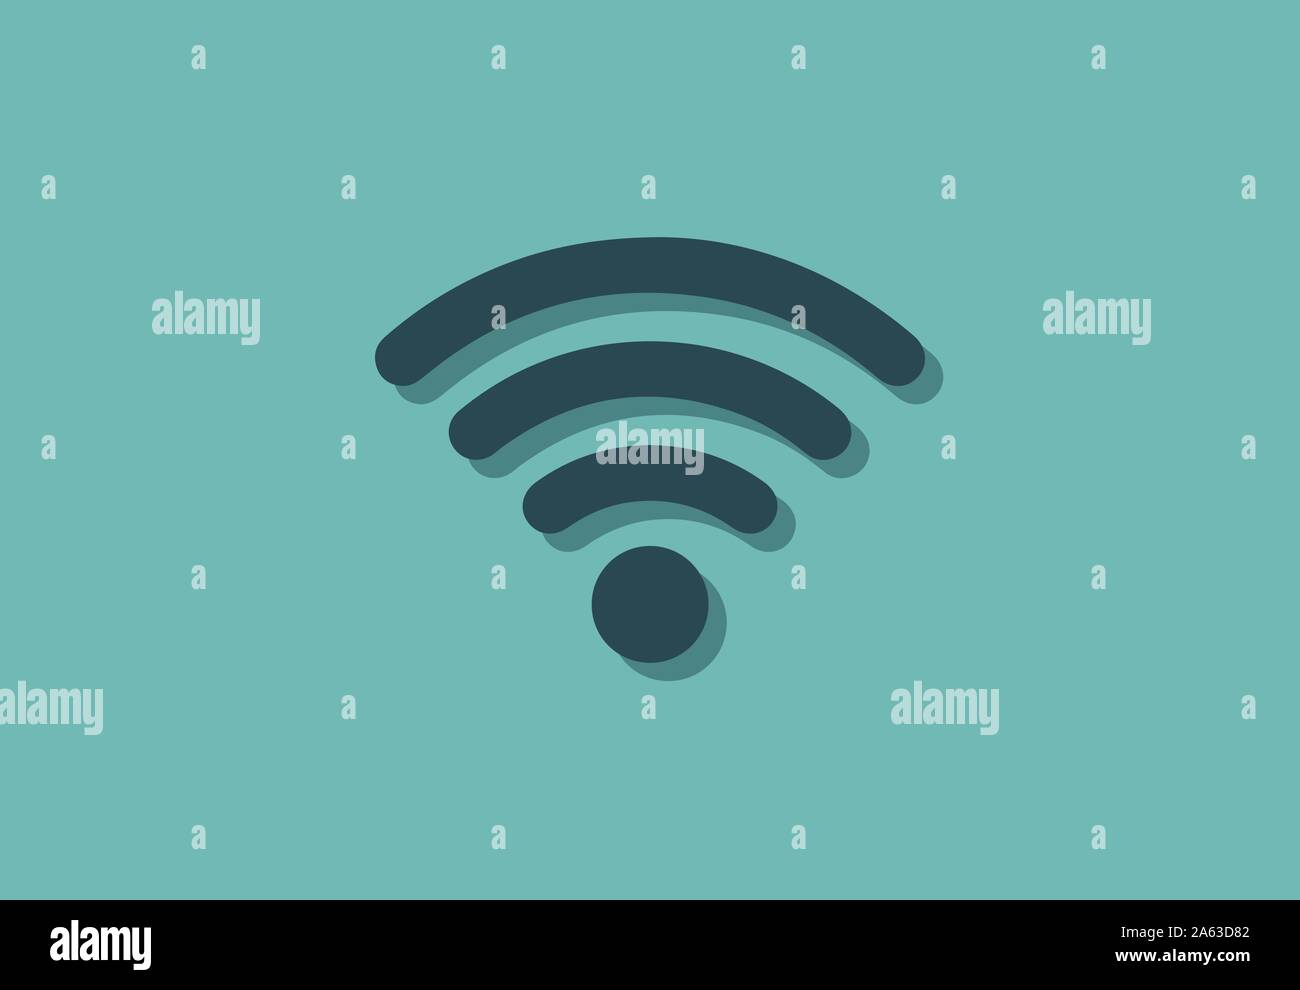 Wifi symbol, minimalistic vector illustration icon Stock Vector